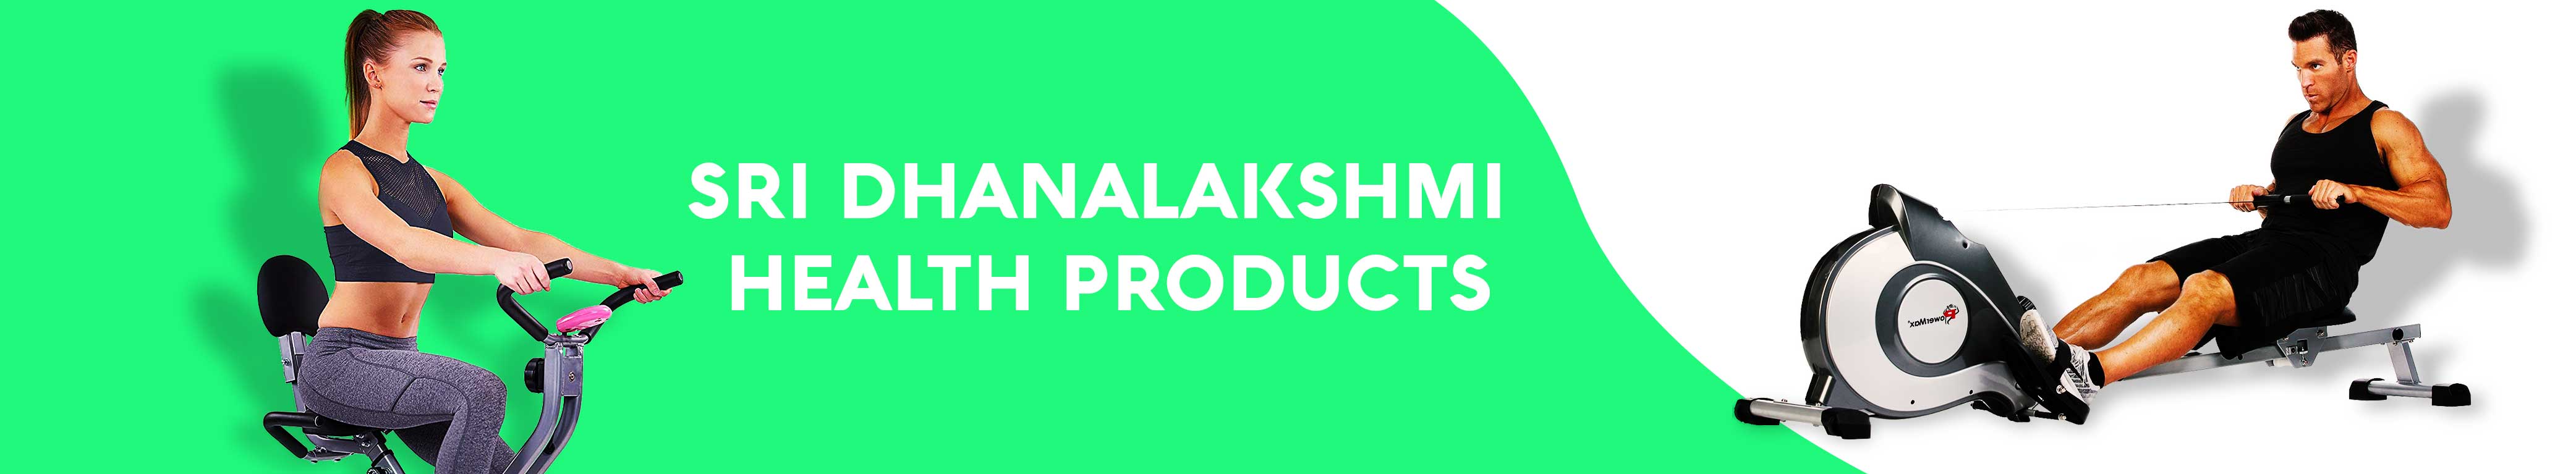 Sri Dhanalakshmi Health Products Banner Image